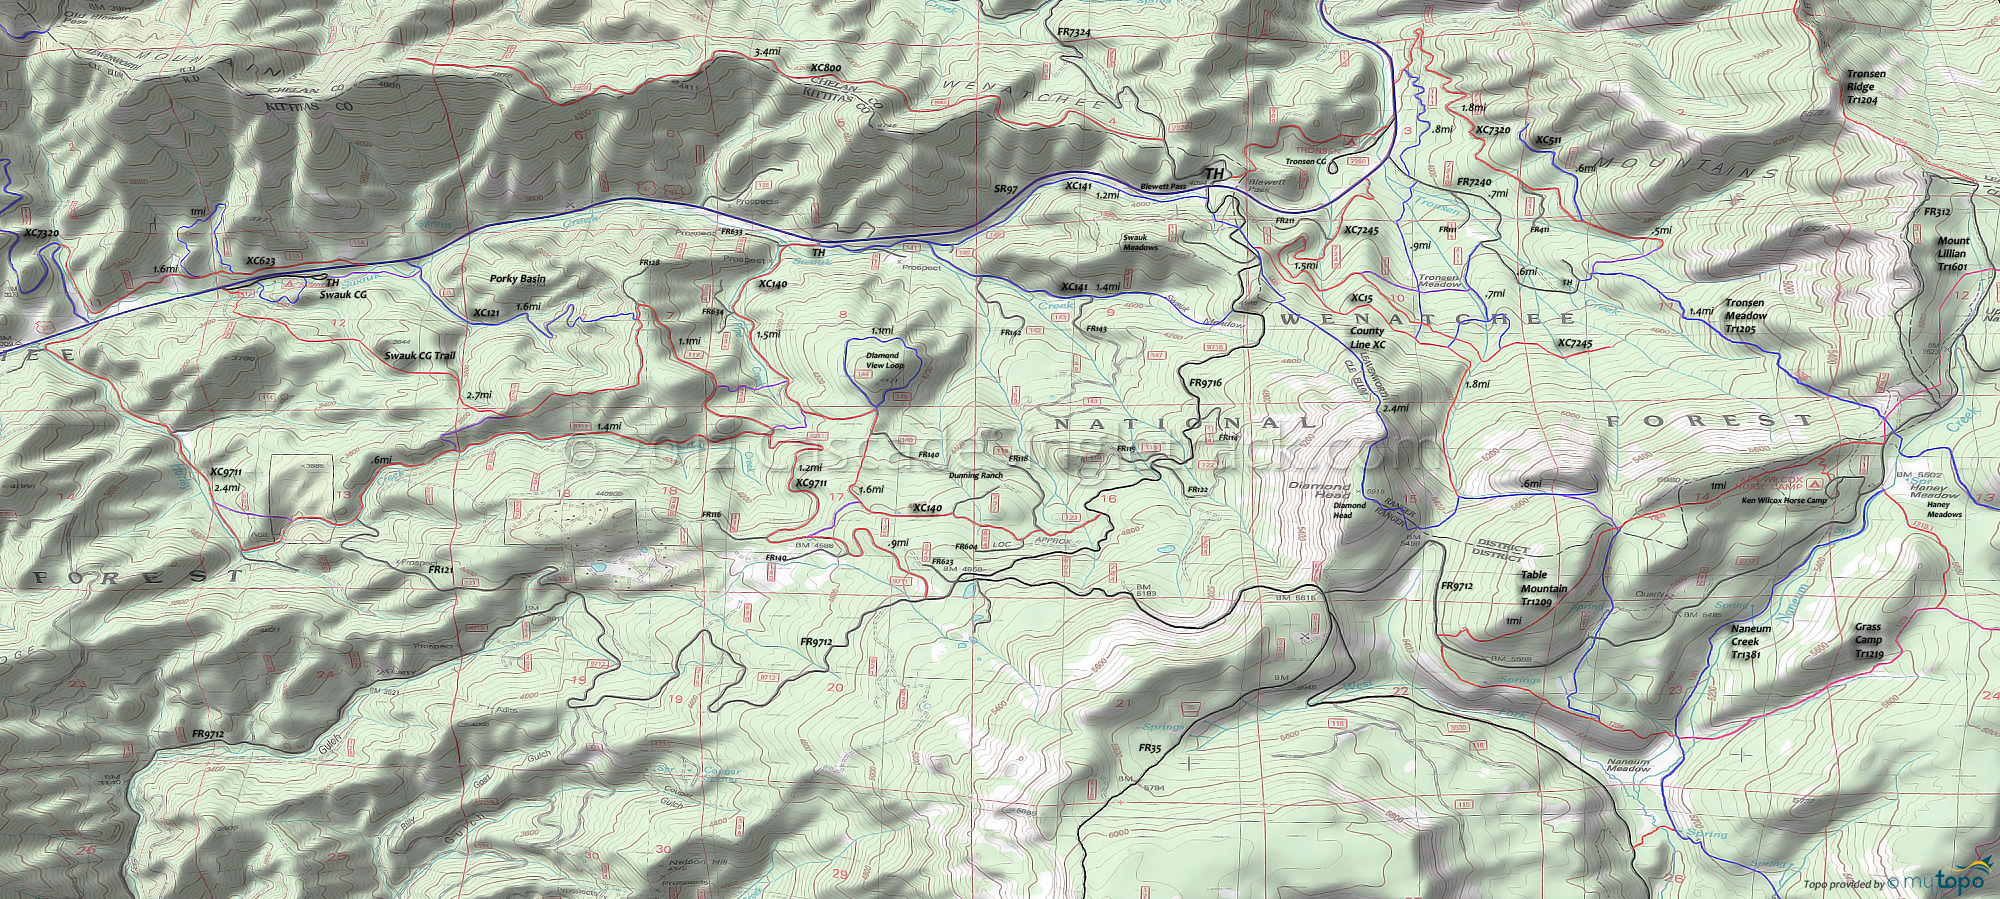 Blewett Pass XC Ski Trails: County Line, XC-006 Swauk Sno Park, XC-15, XC-111, XC-121, XC-140, XC-141, XC-623, XC-800, XC-7245, XC-7320, XC-9715 Area Topo Map